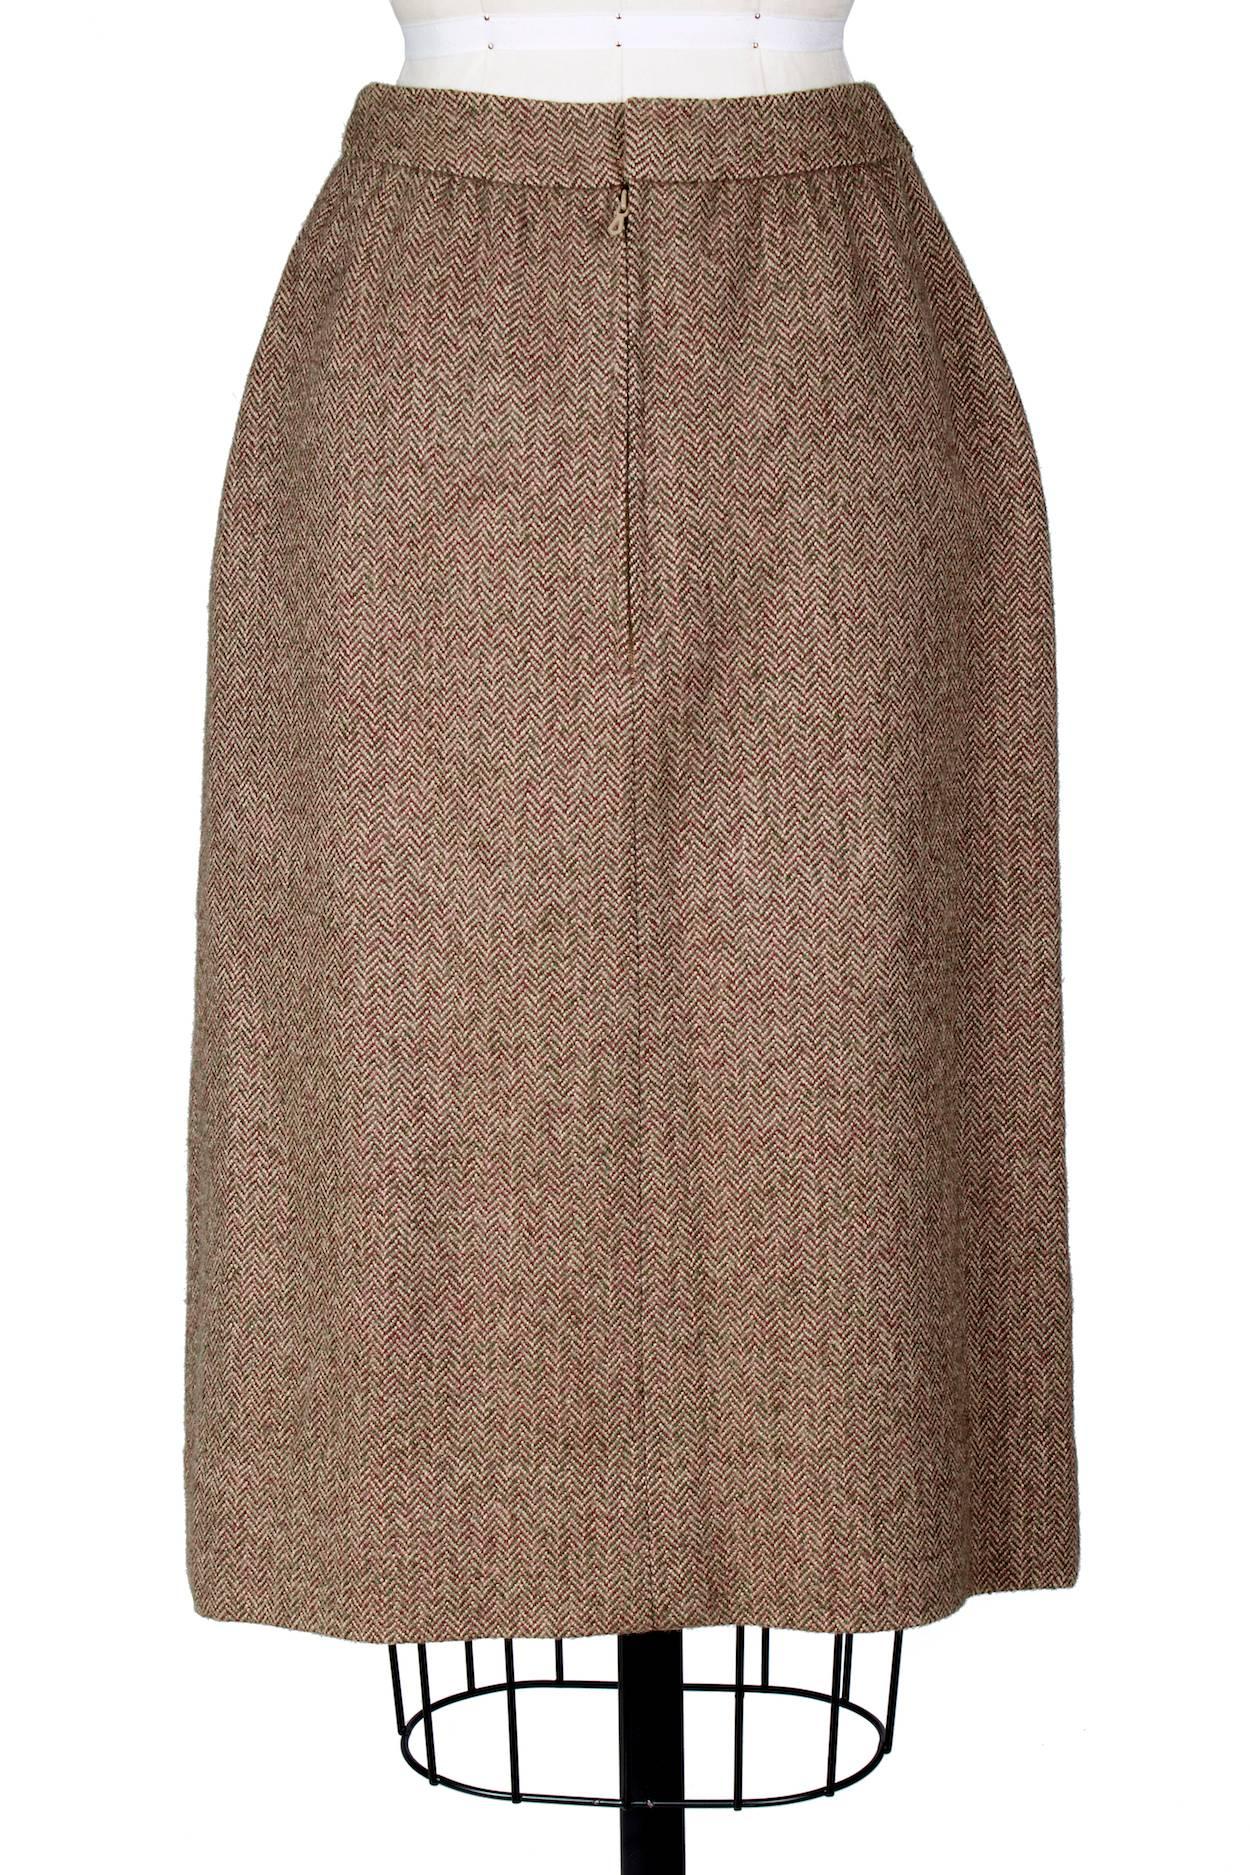 Jean Patou 3 Piece Wool Tweed Skirt Suit circa 1950s 1